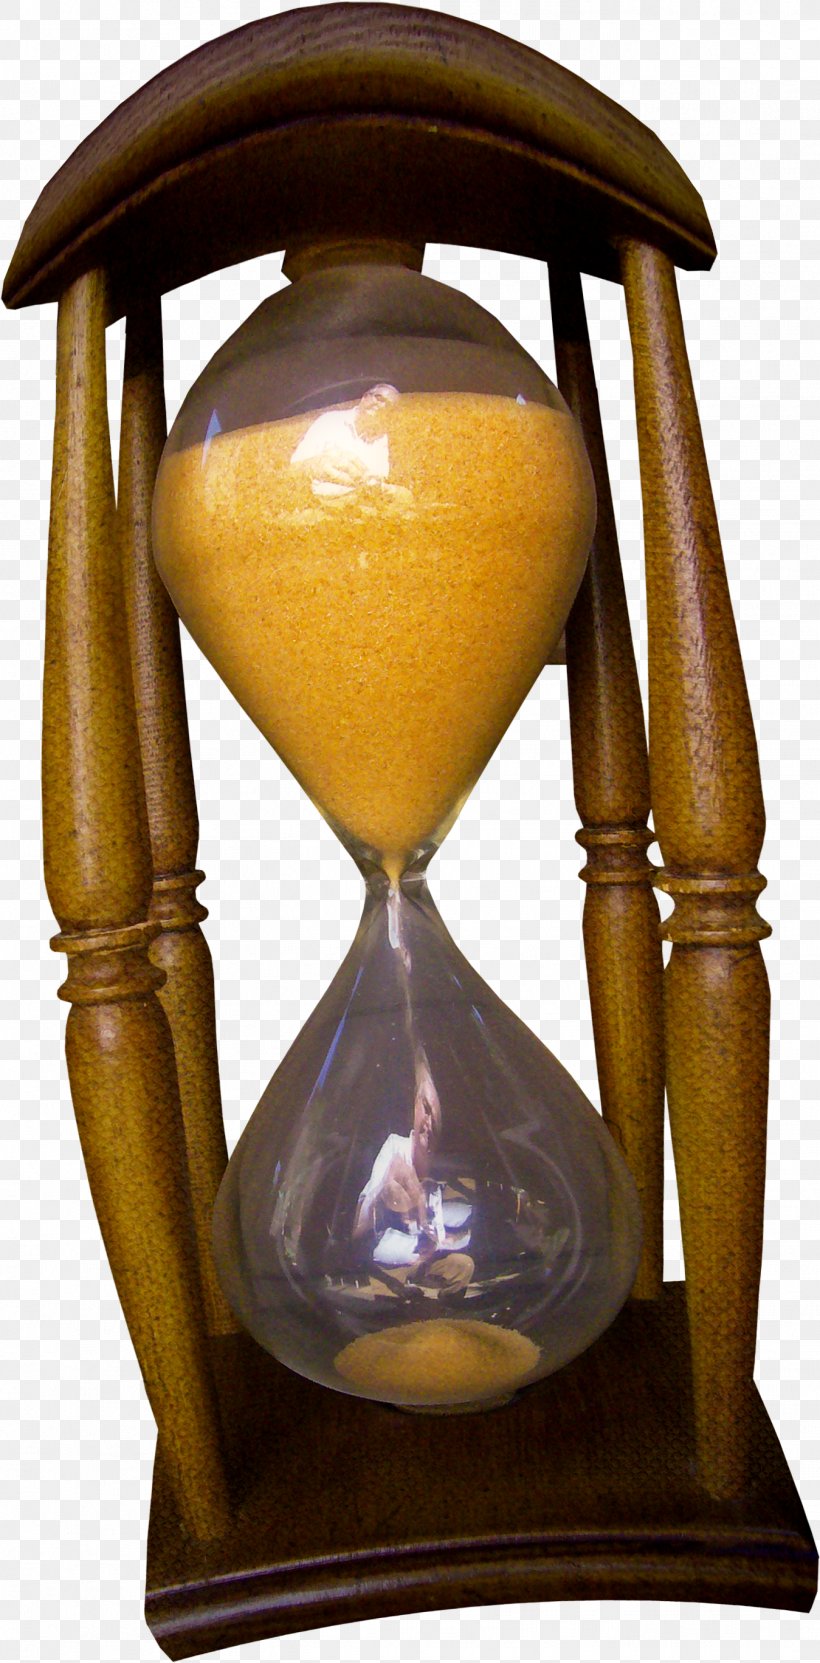 Hourglass Clock Gratis, PNG, 1349x2737px, Hourglass, Blog, Centerblog, Clock, Gratis Download Free